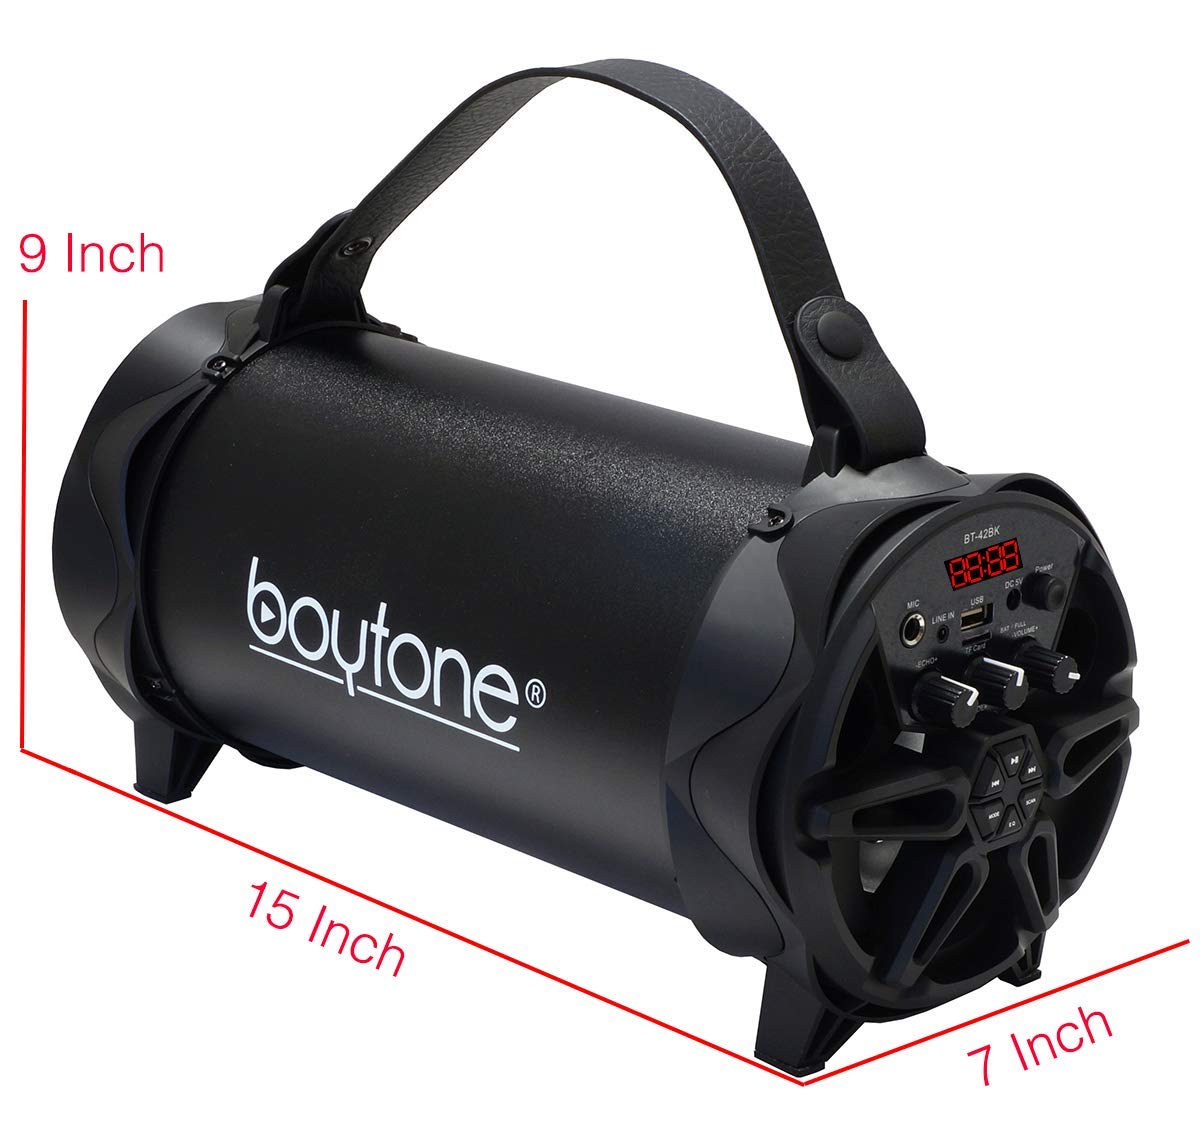 Boytone Portable Bluetooth Speaker with Water Resistant, Black, BT-42BK - image 2 of 6